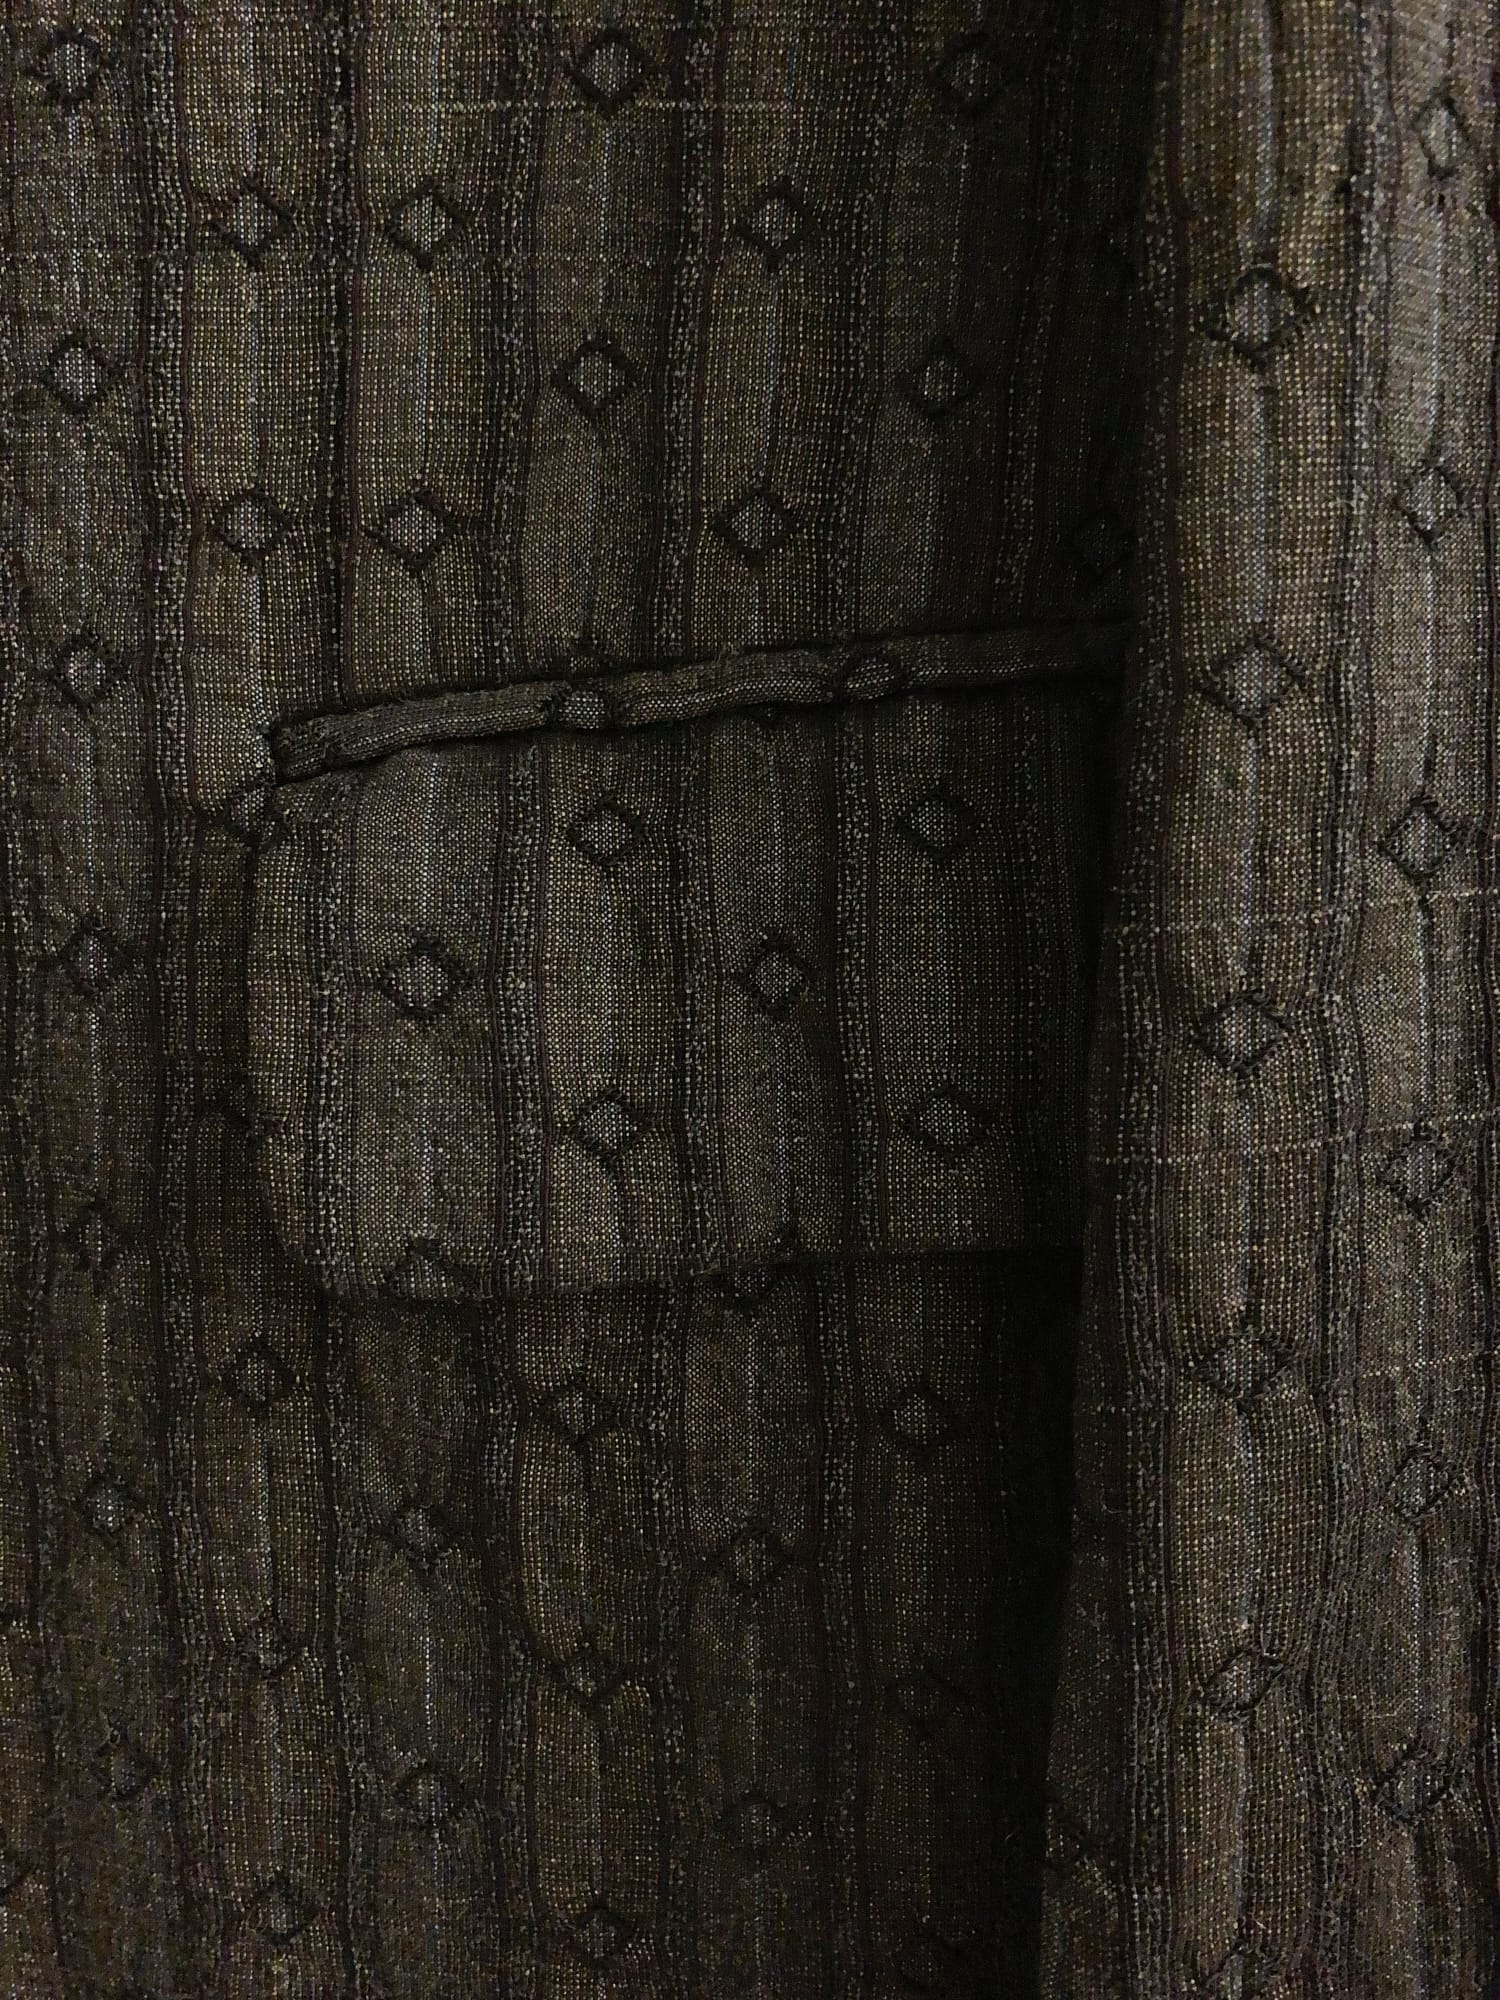 Callaghan Romeo Gigli 1980s stripe and diamond patterned wool blazer